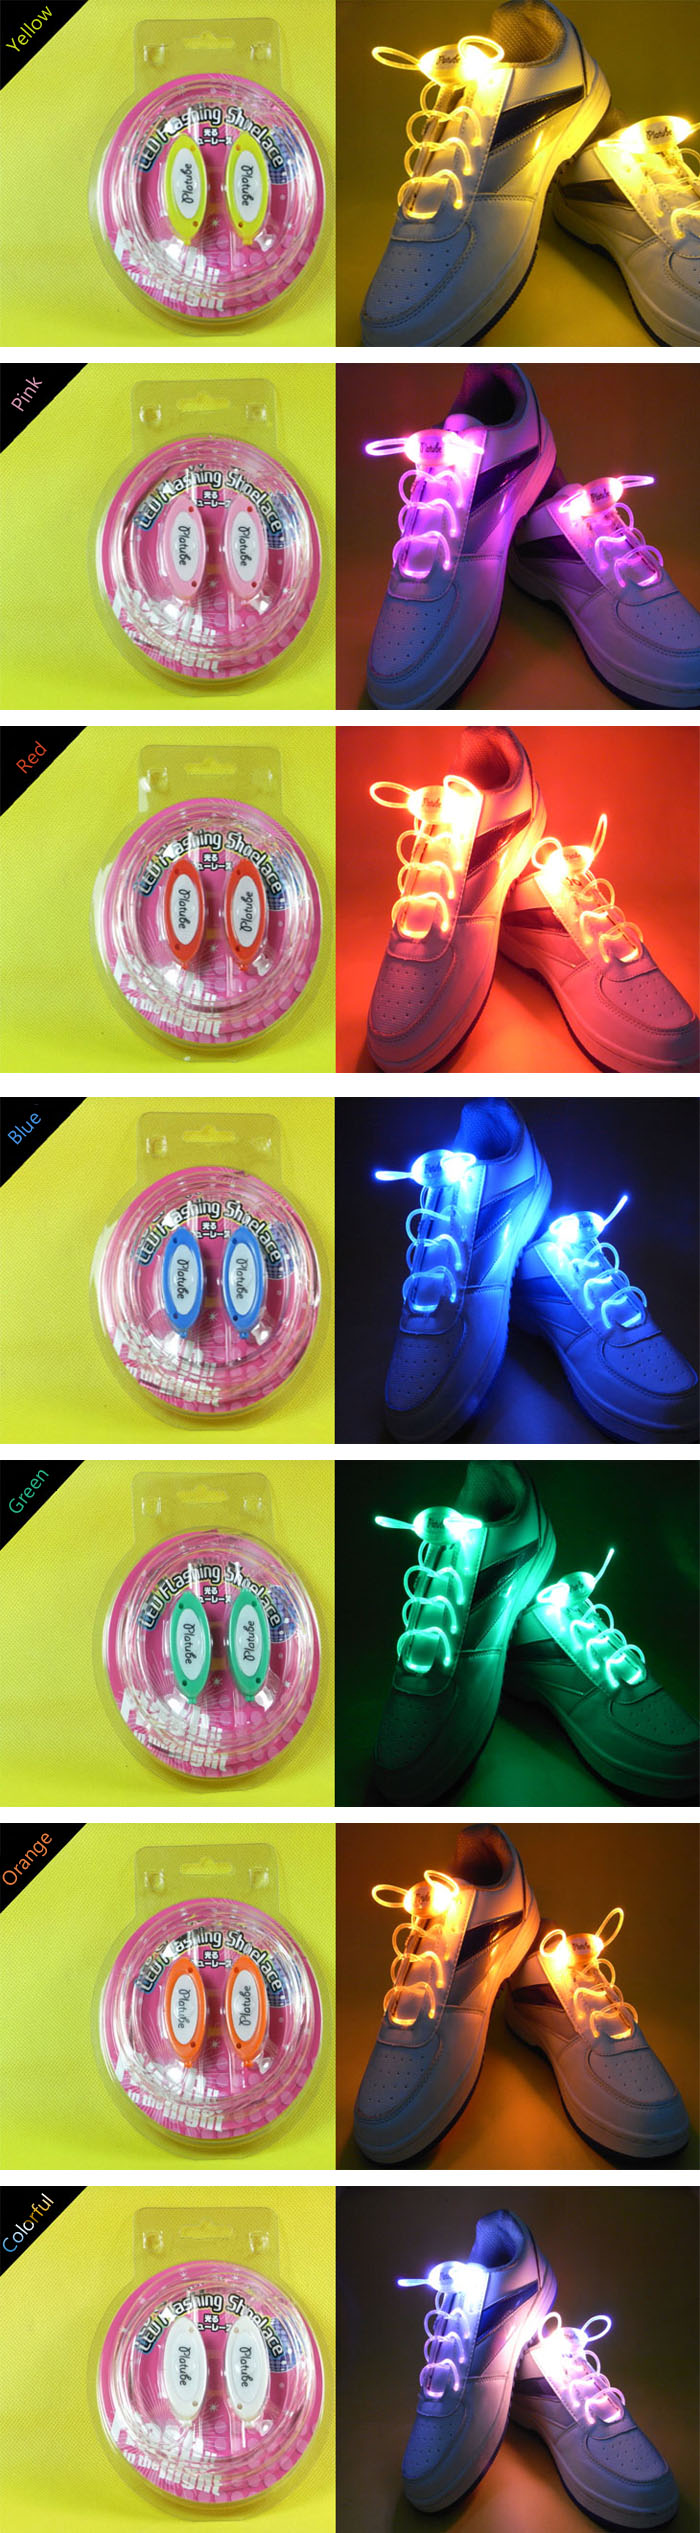 4th-Generation-LED-Glowing-Shoelaces-Flash-Shoelaces-Shoe-Strap-Outdoor-Dance-Party-Supplies-1032027-7